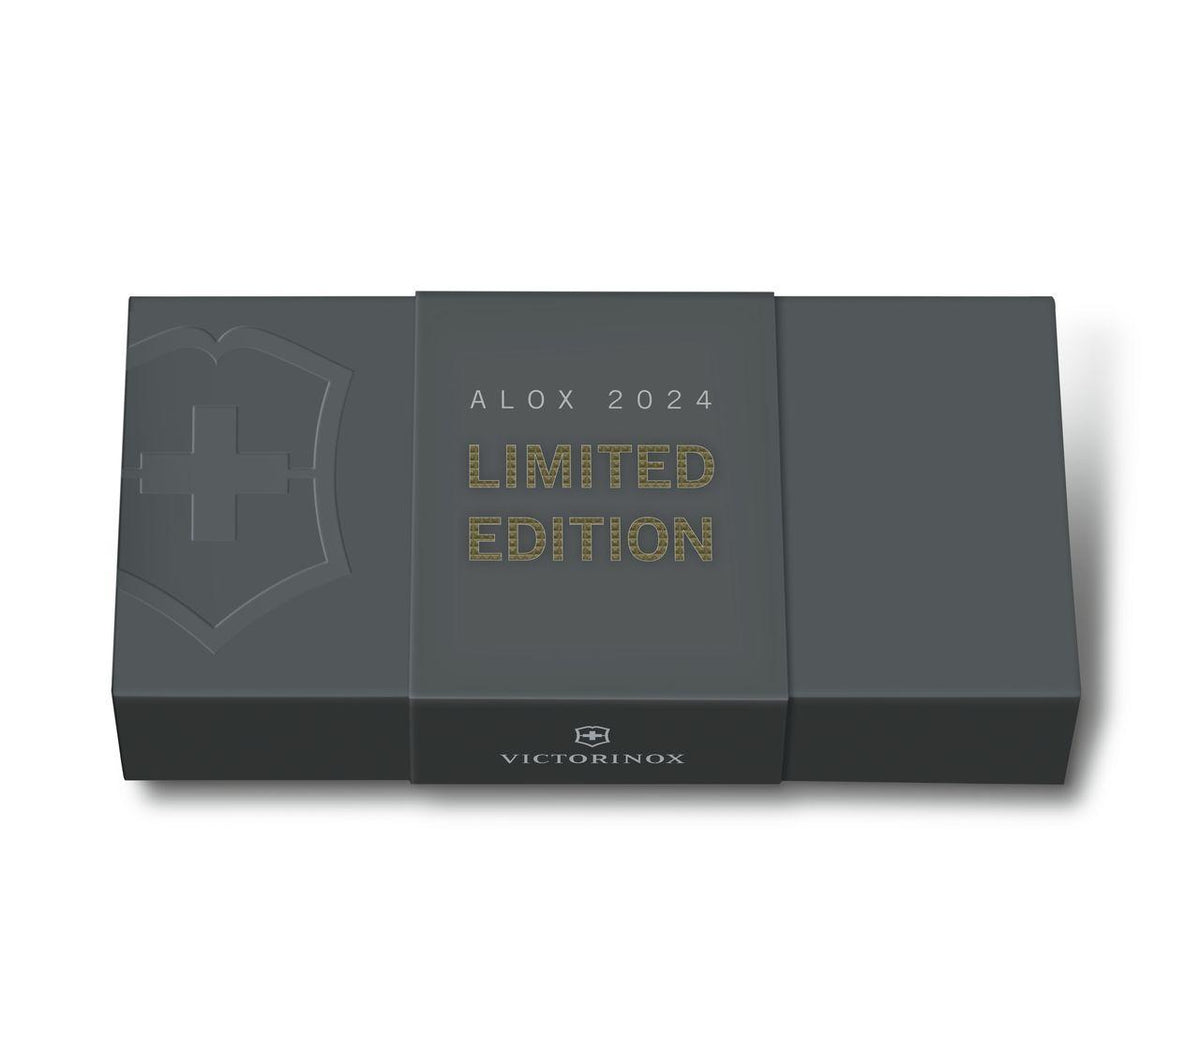 Victorinox - Small Swiss Army Knife - Classic ALOX 2024 Limited Edition